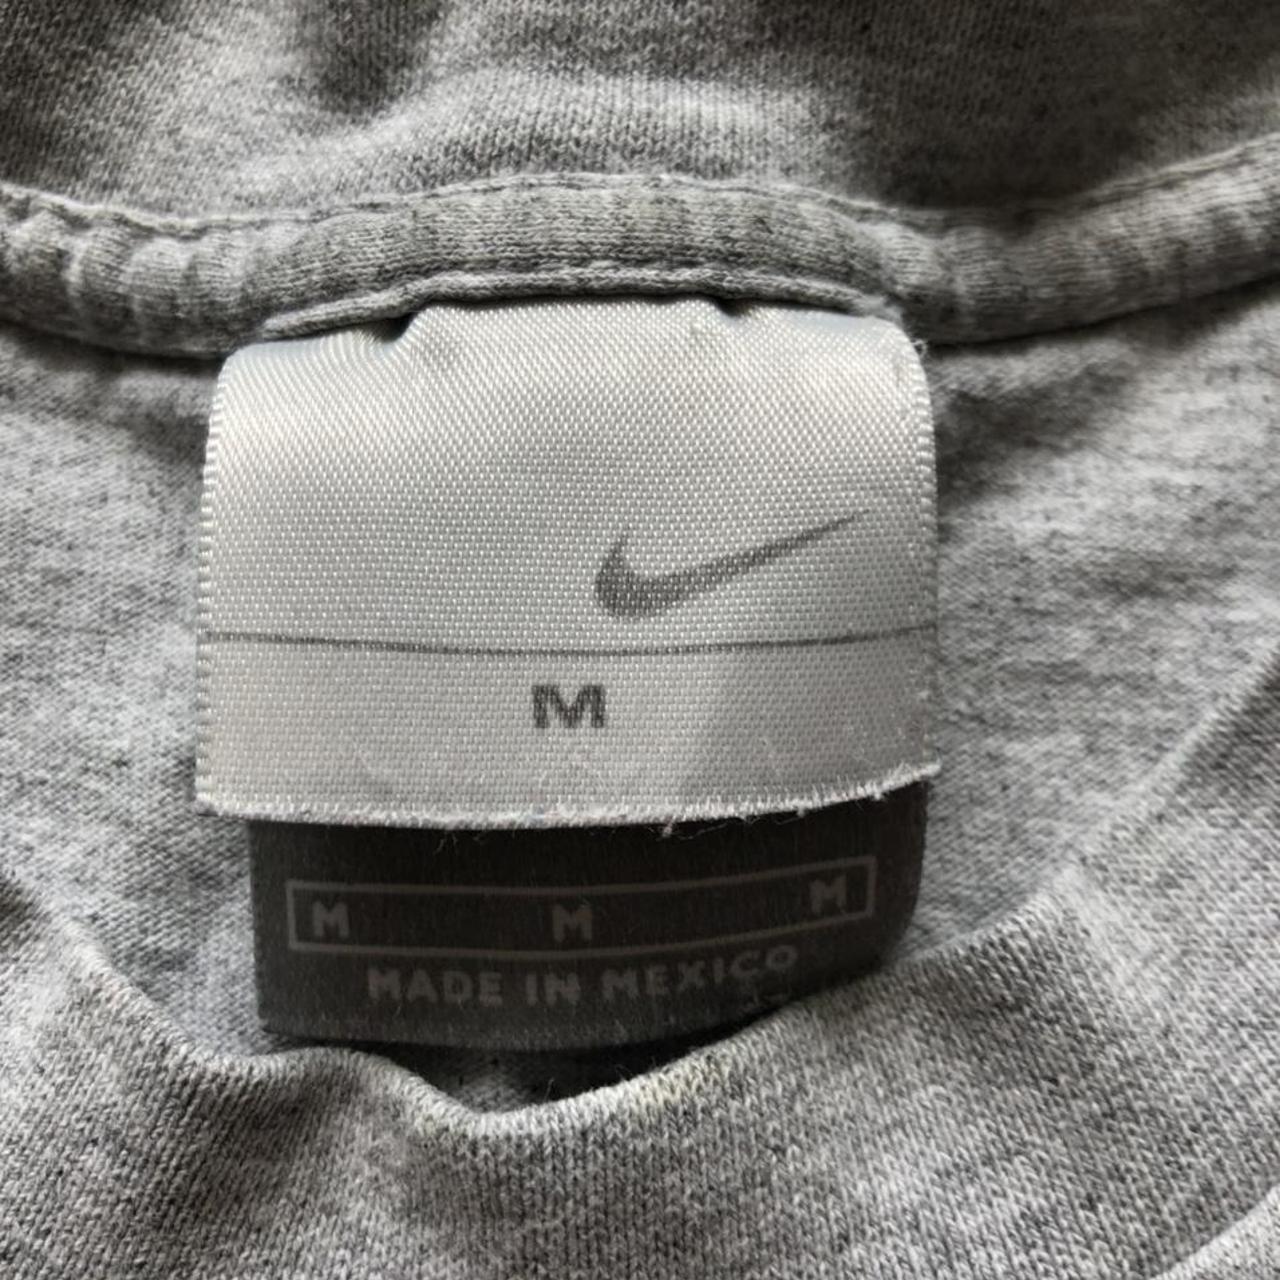 Nike Boston marathon t shirt Size medium Worn a... Depop